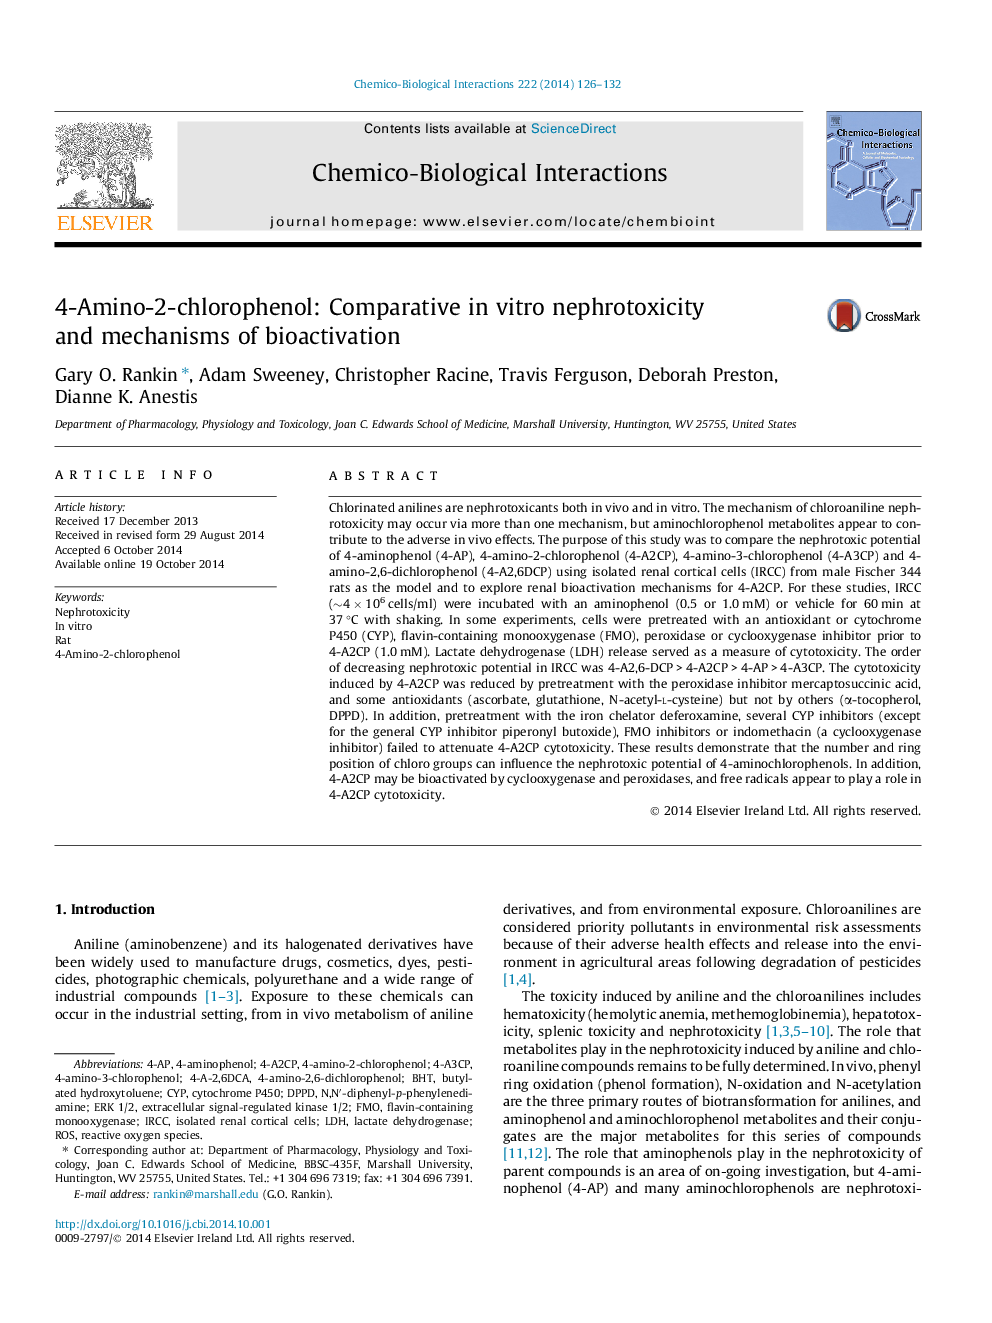 4-Amino-2-chlorophenol: Comparative in vitro nephrotoxicity and mechanisms of bioactivation